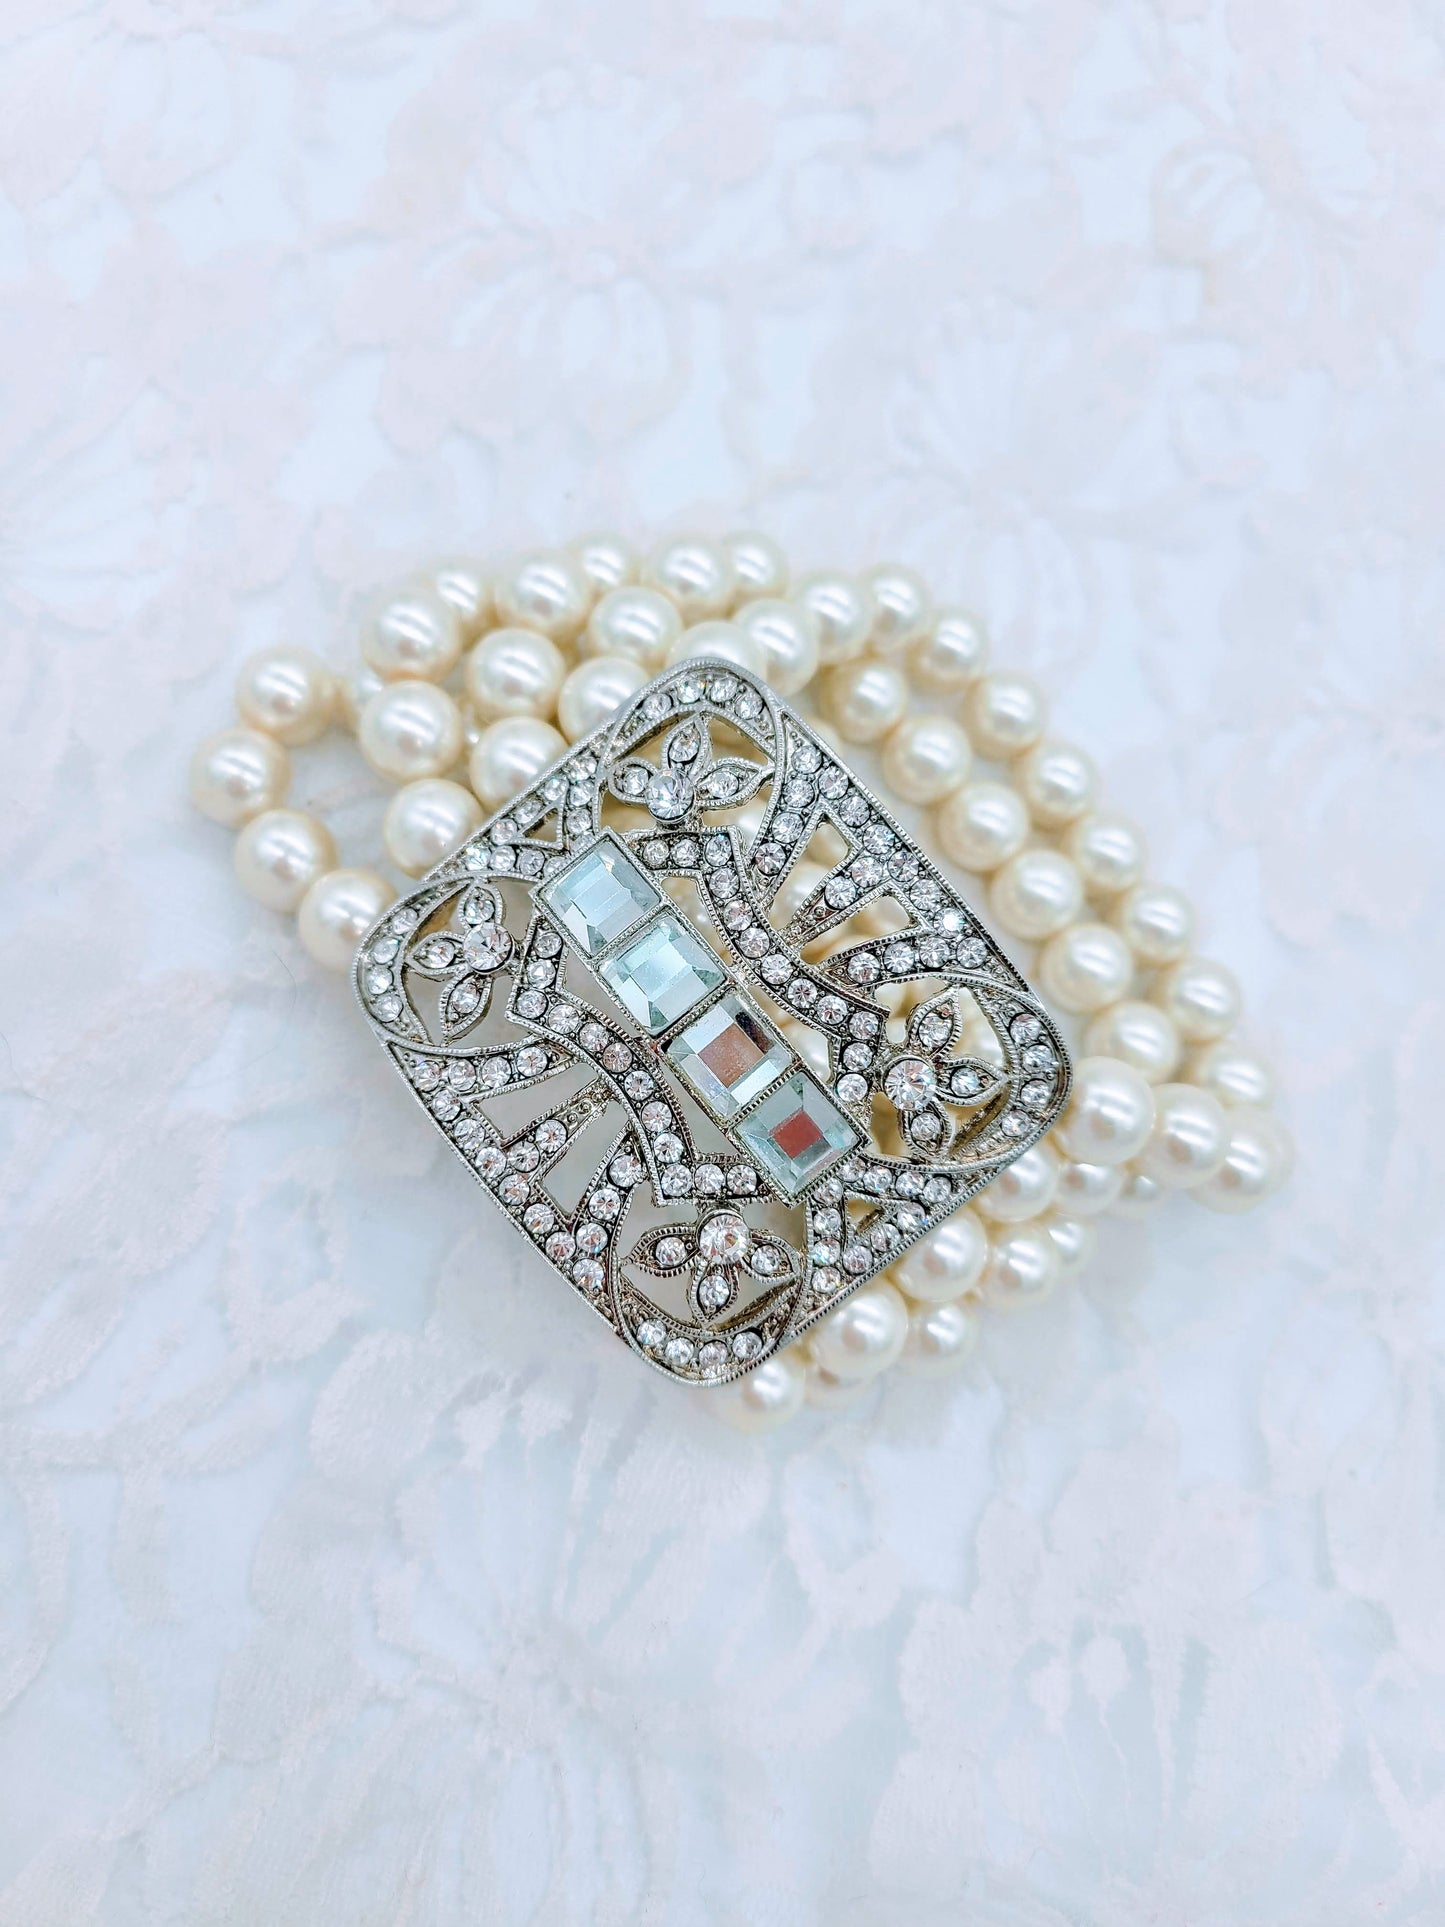 Gatsby Cuff Bracelet~ Large Stretchy Pearl Cuff Bracelet with Rhinestones ~ Very Roaring Twenties